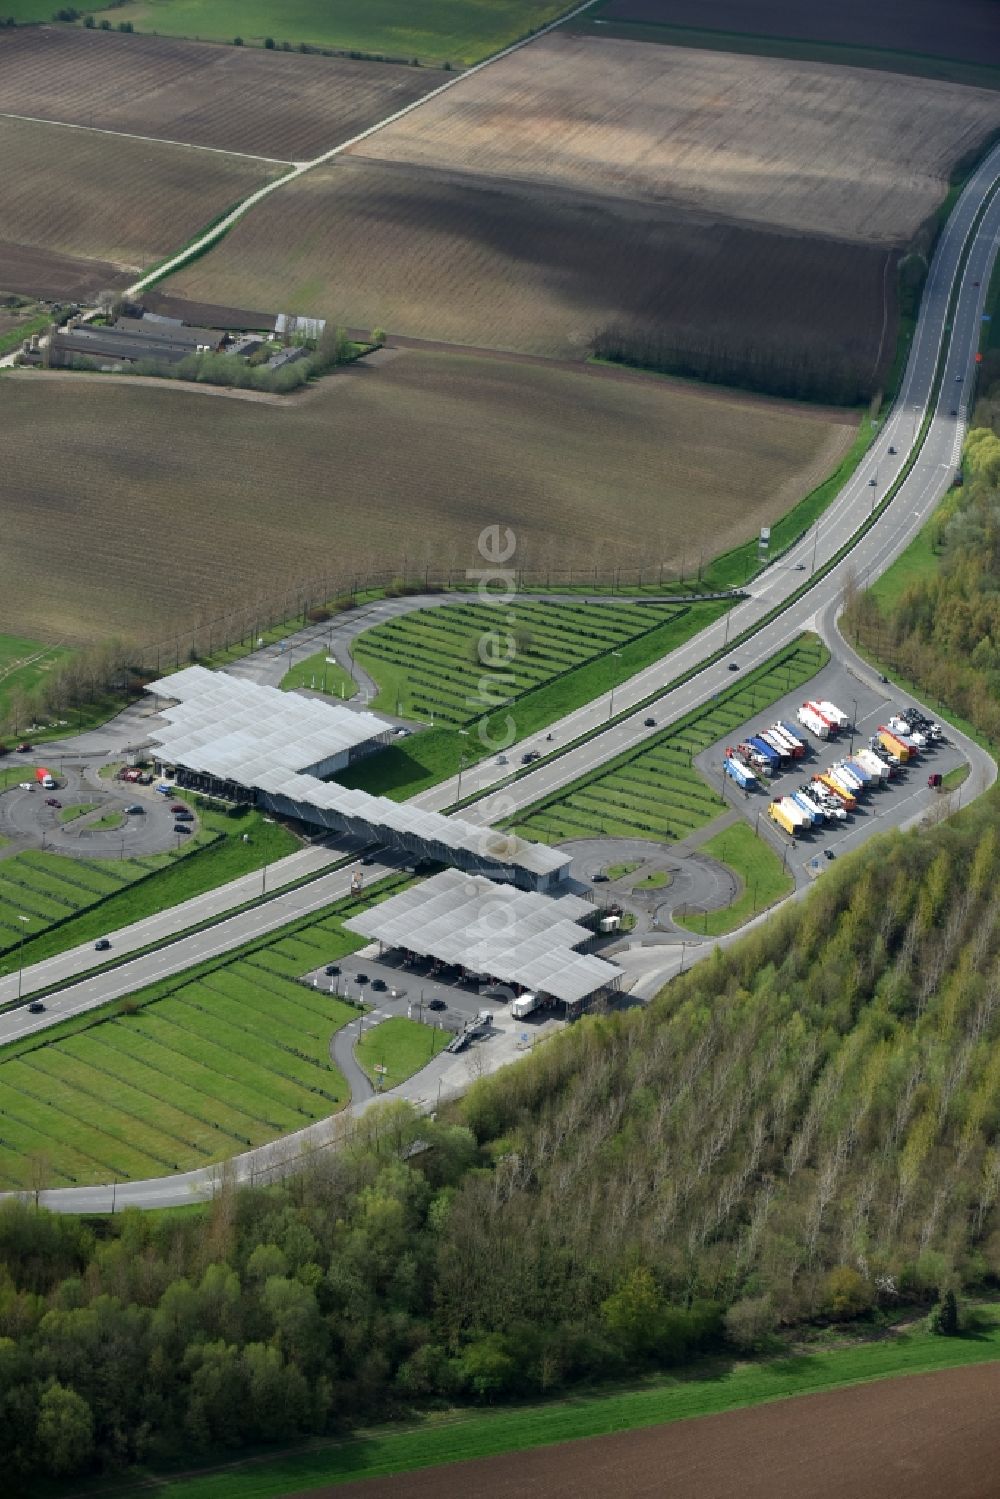 Hellebecq von oben - Autobahn- Raststätte der A8 / E429 Aire de Service de Hellebecq in der Région wallonne, Belgien